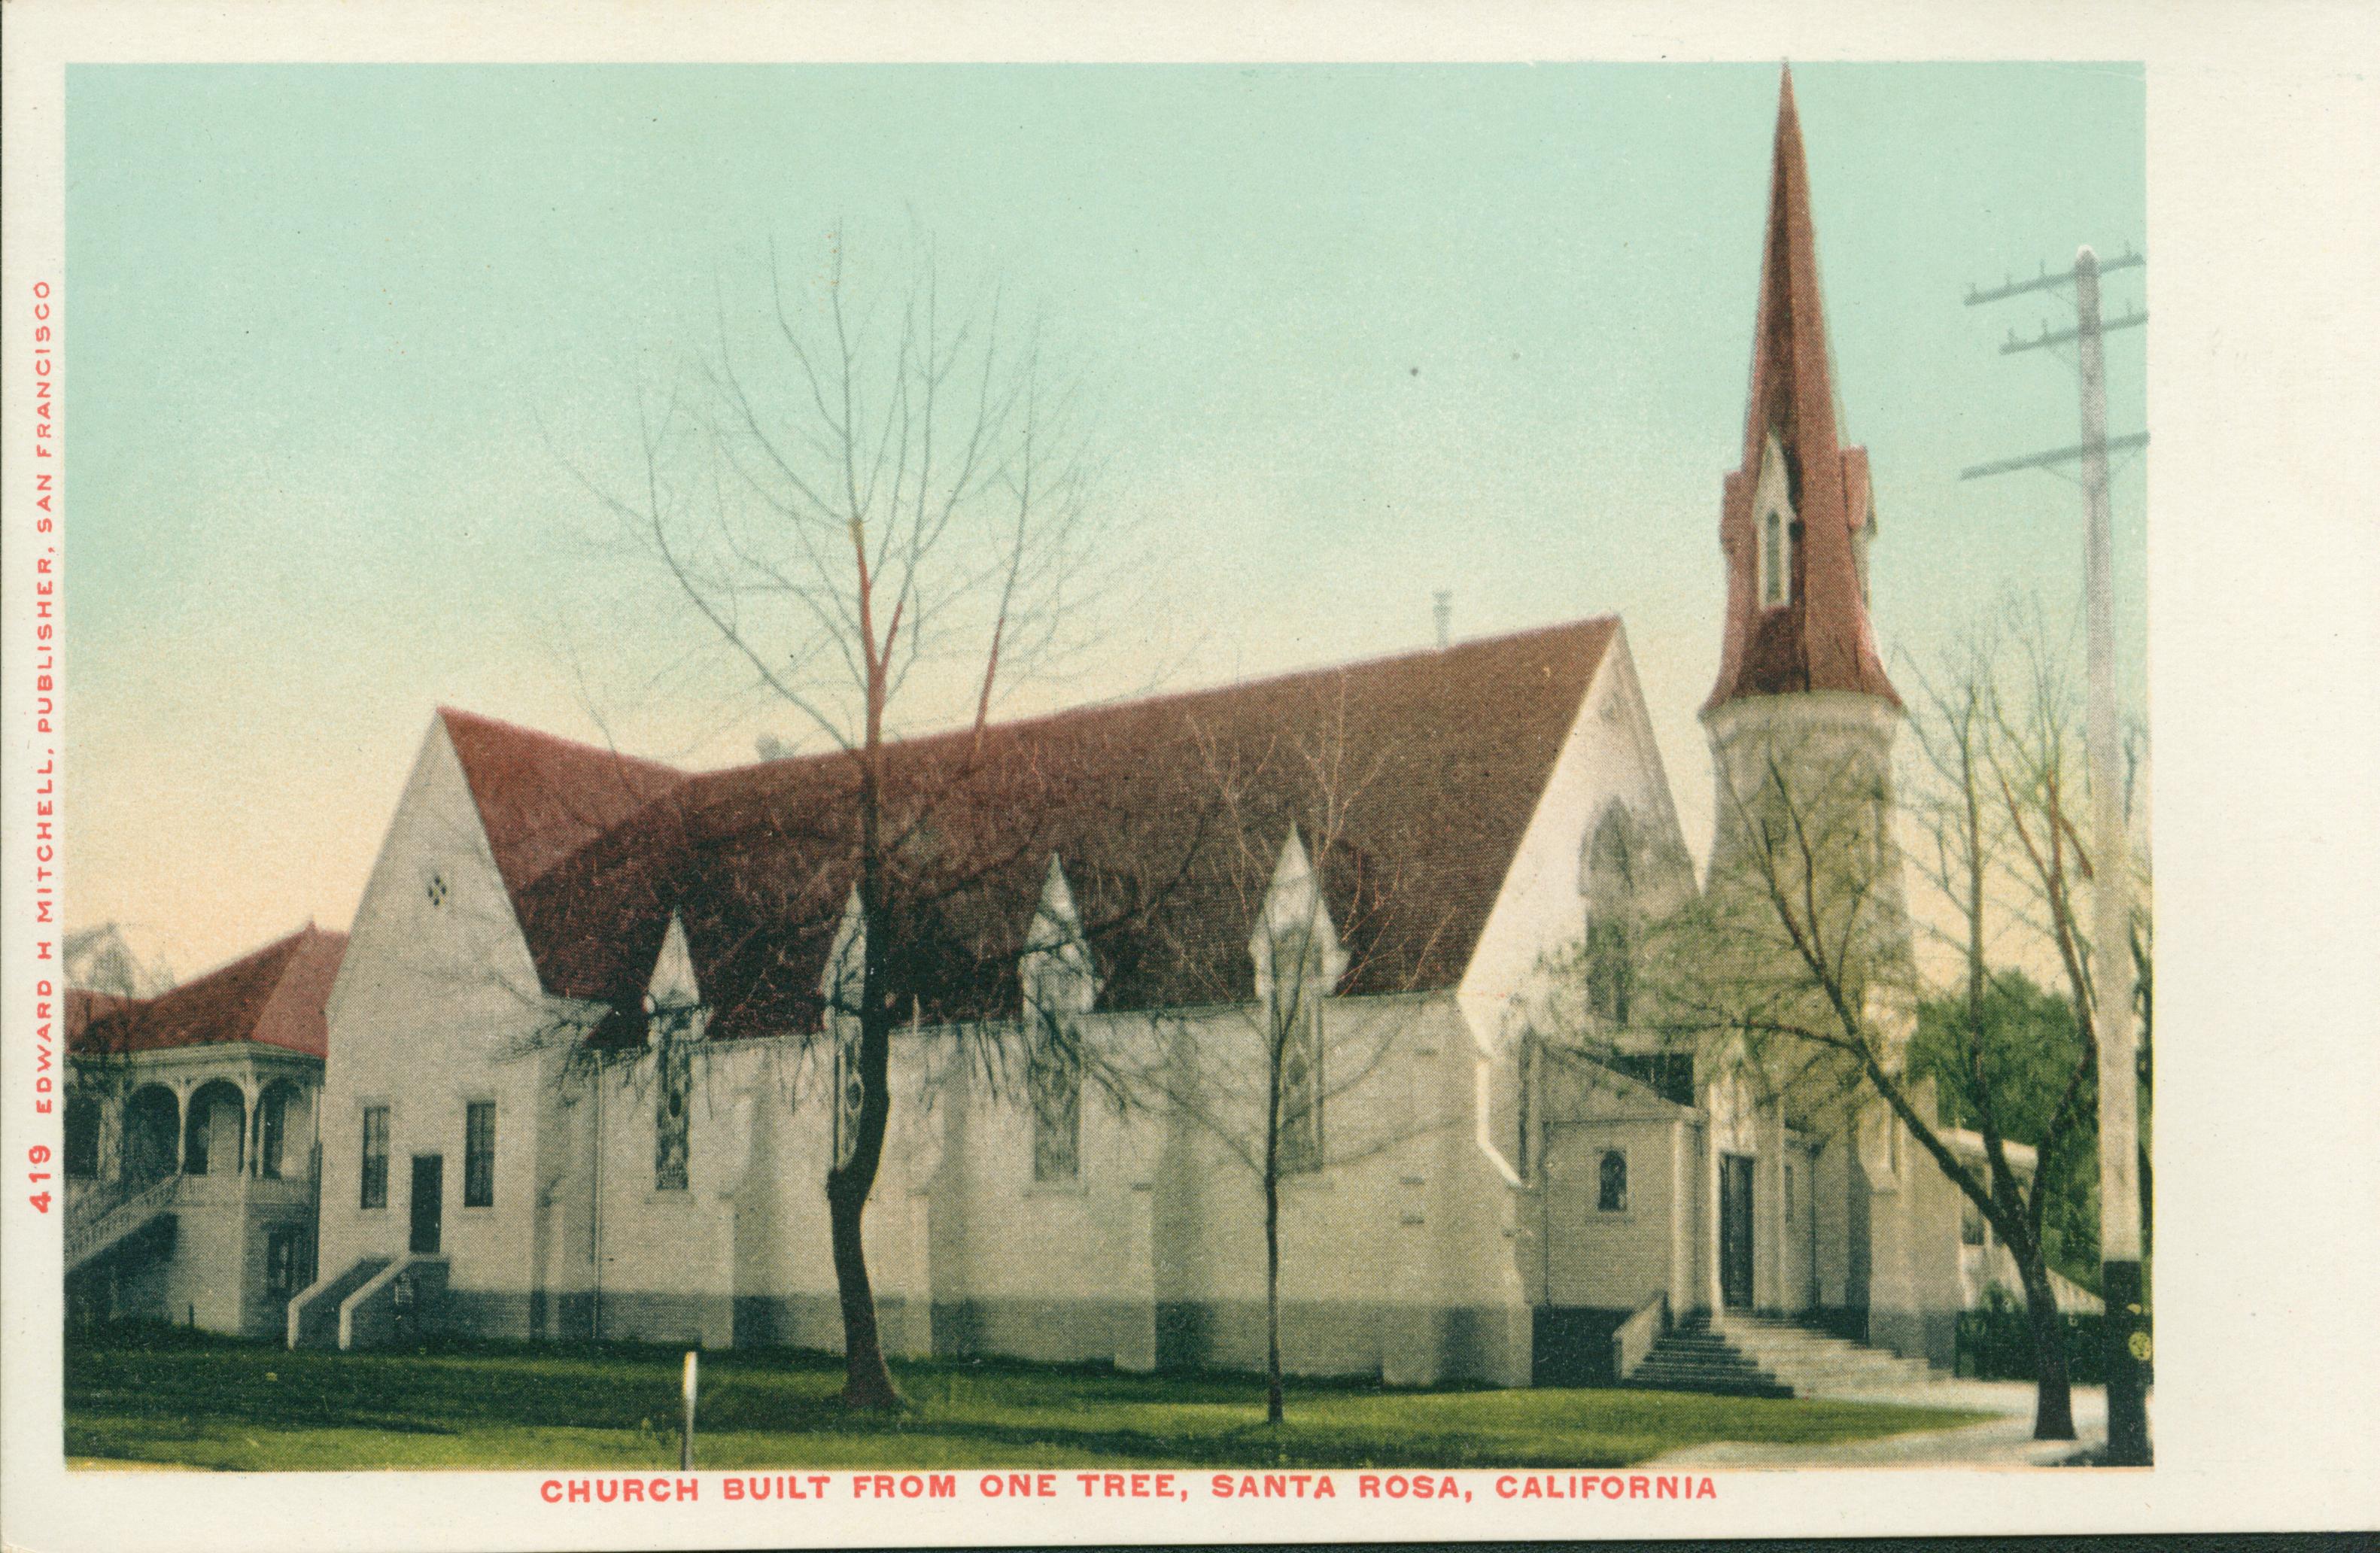 Shows a corner view of a church in Santa Rosa